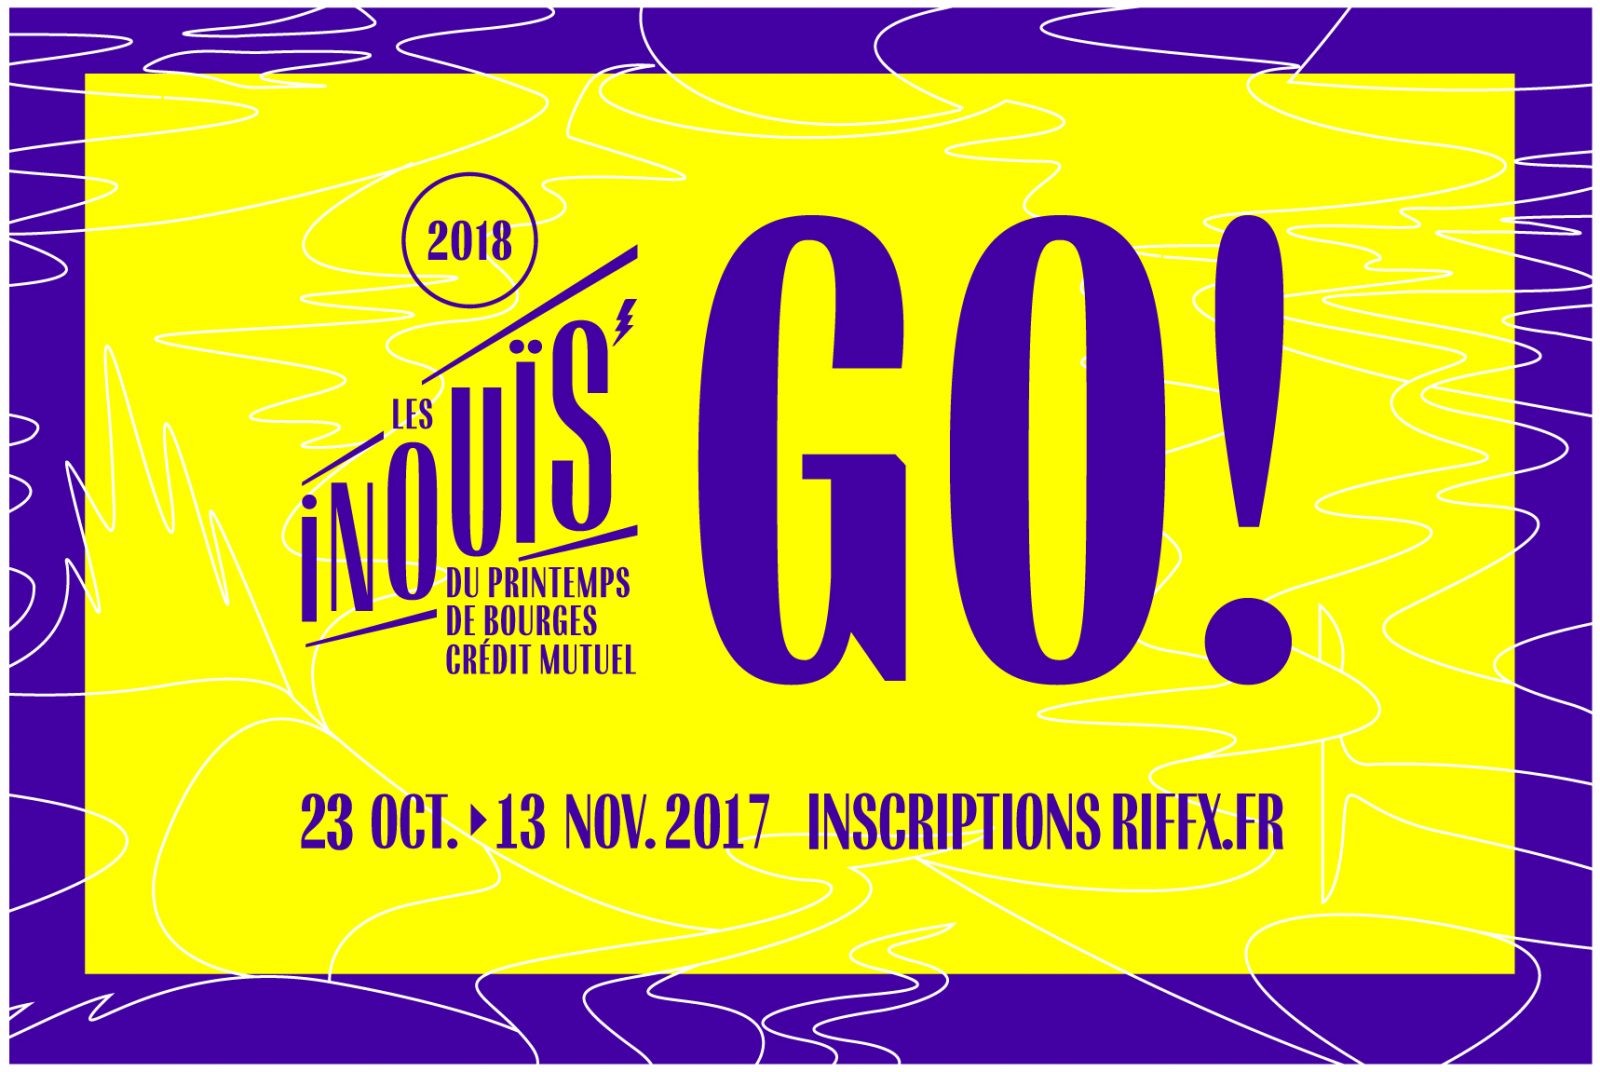 GO! #iNOUïS2018 - Inscriptions jusqu'au 13 novembre 2017